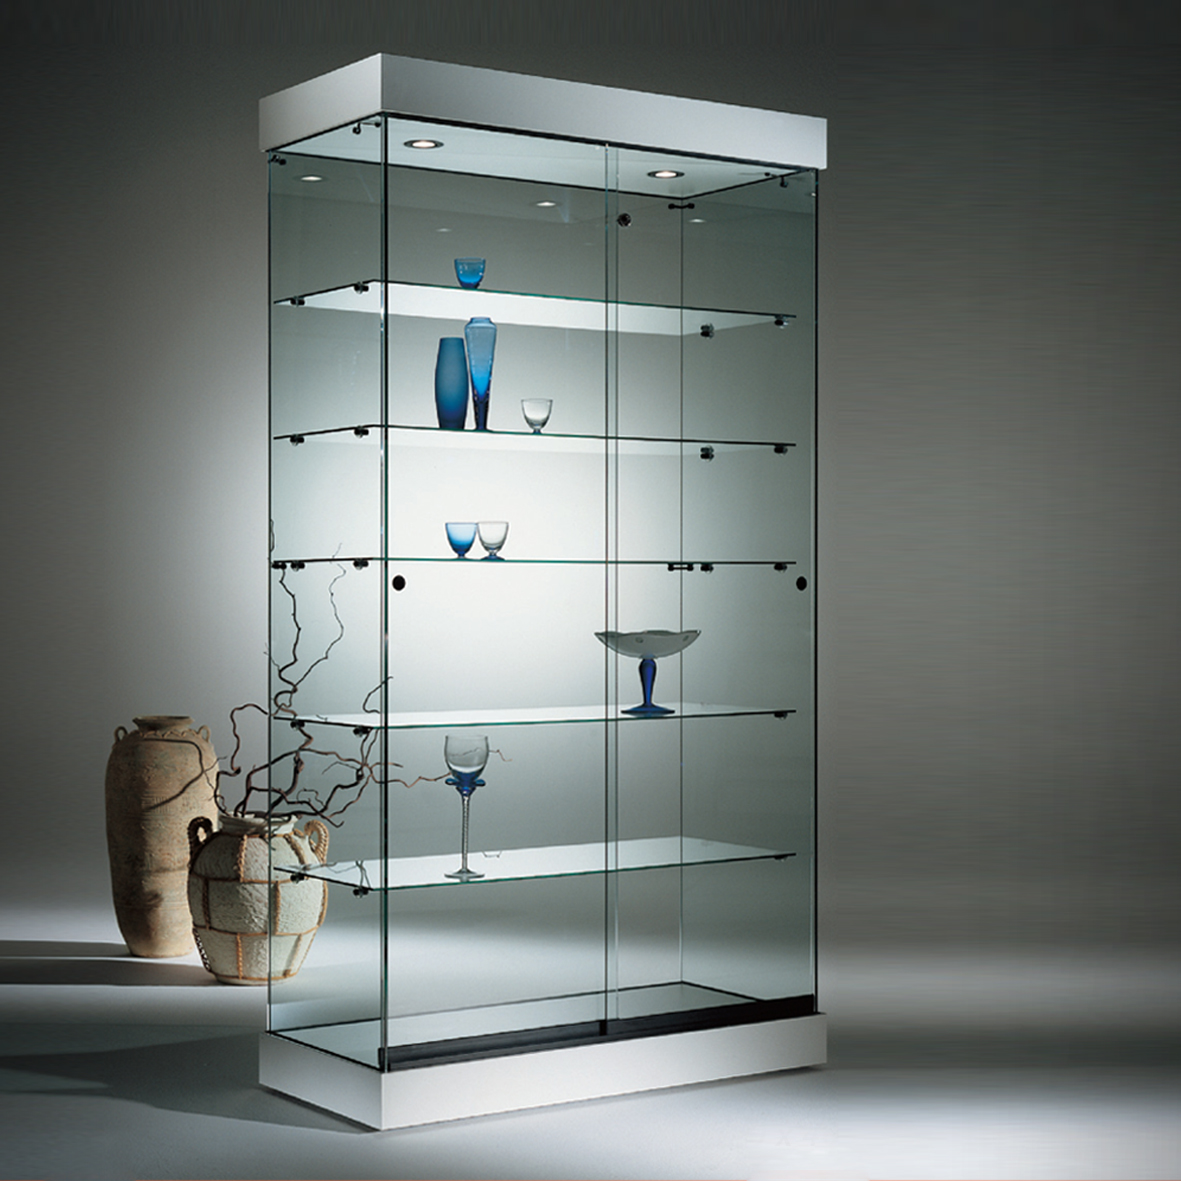 S6+PL Base Nova Frameless Glass Cabinet with illuminated Canopy